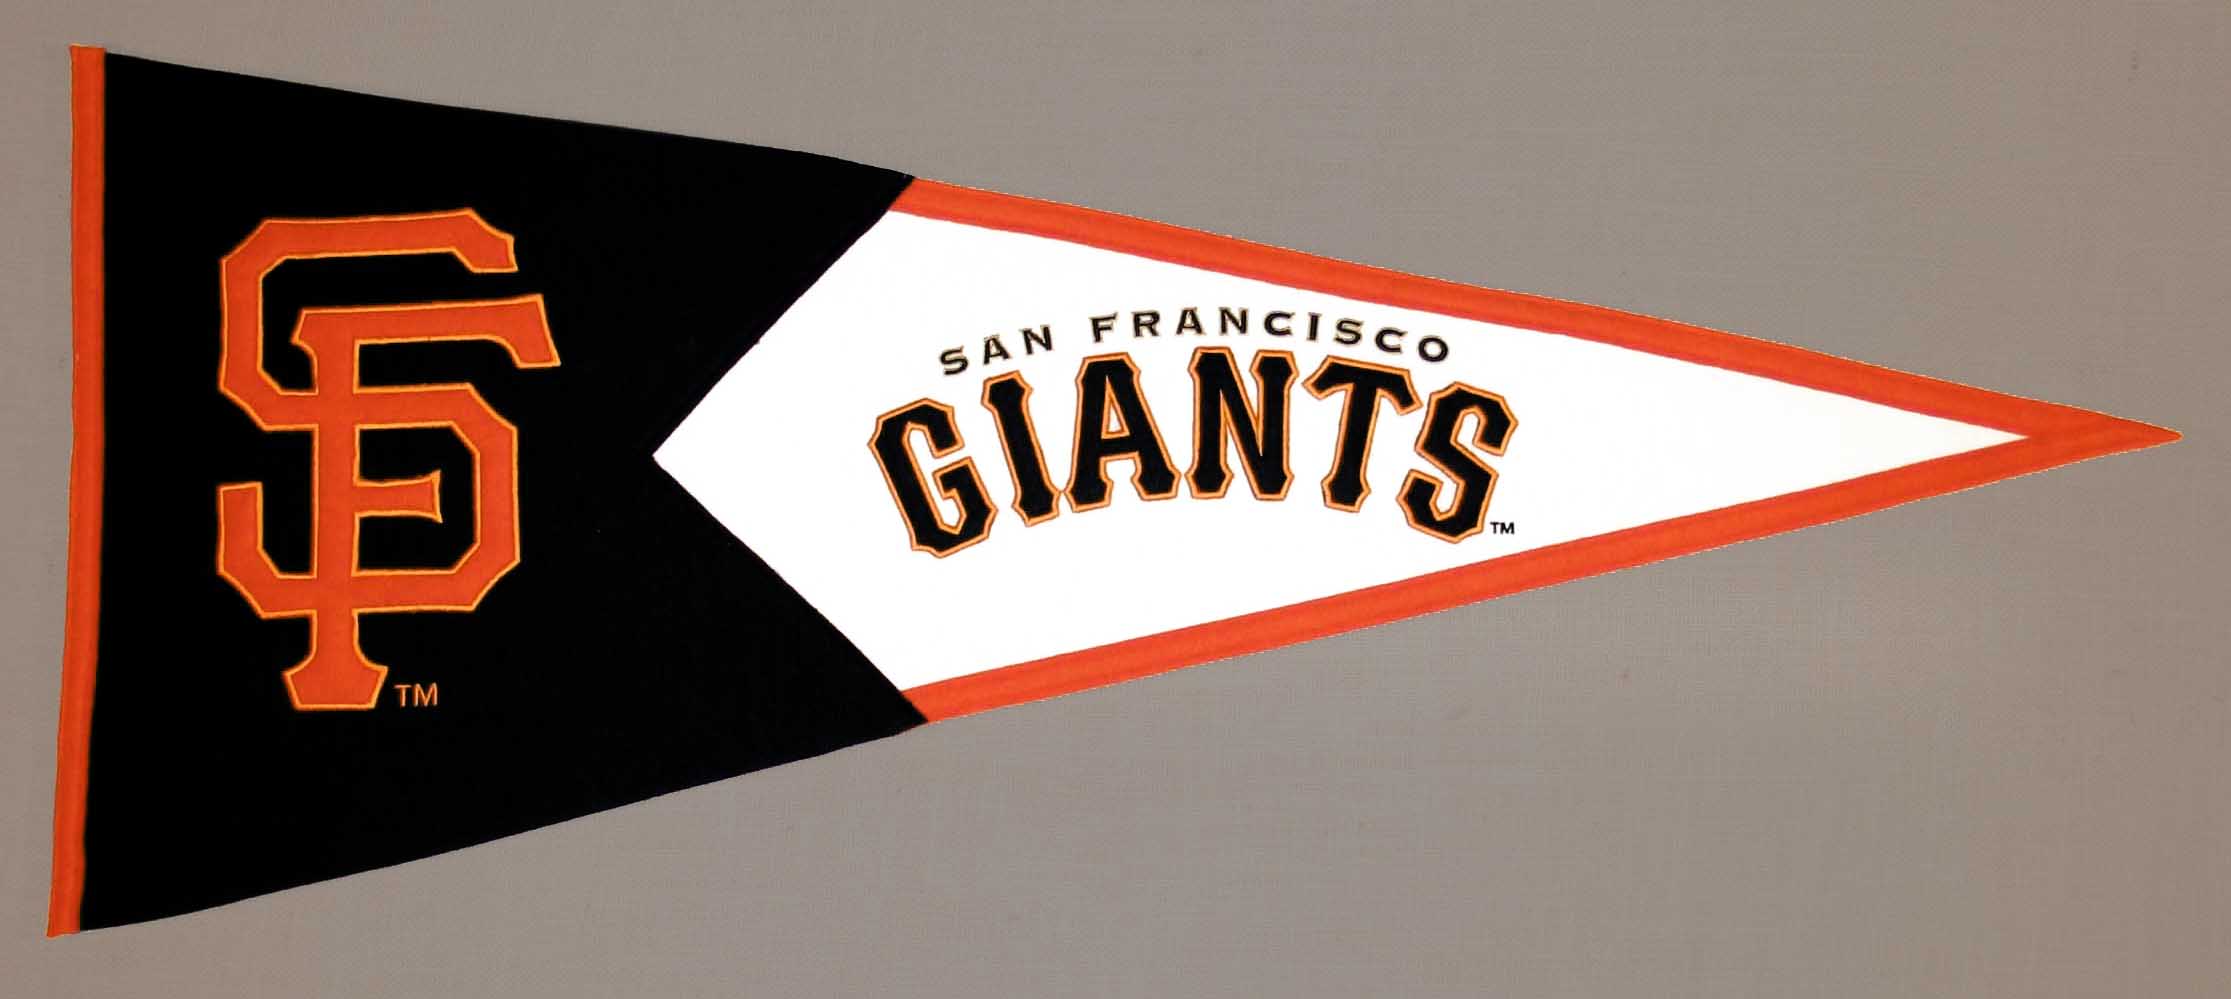 San Francisco Giants wallpaper HD background download Facebook